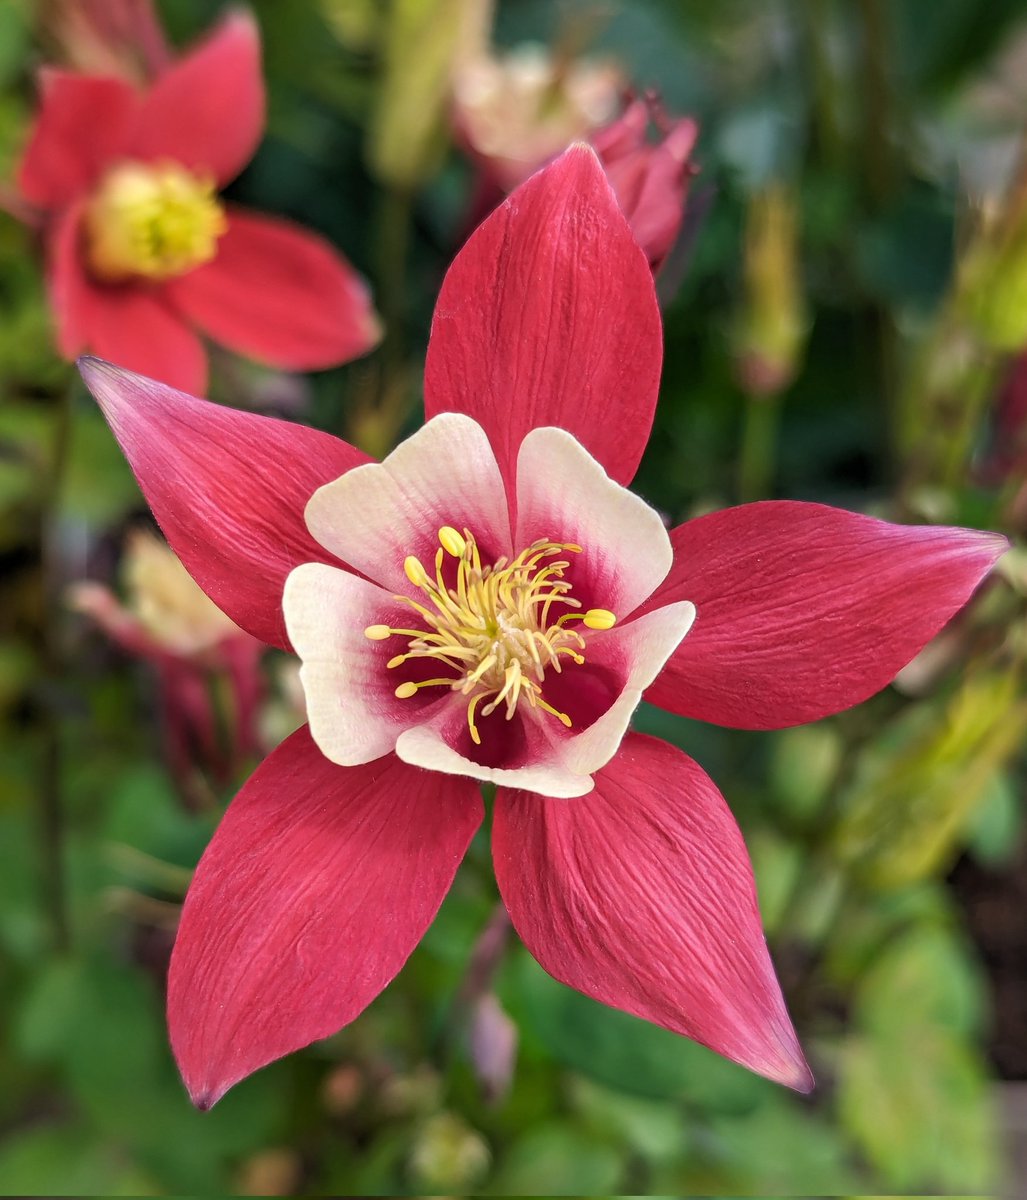 Shining bright ☀️
Aquilegia - 'Red Star' 🌿 ❤️‍🔥 ✌️😌
#GardensHour #Flowers #Spring